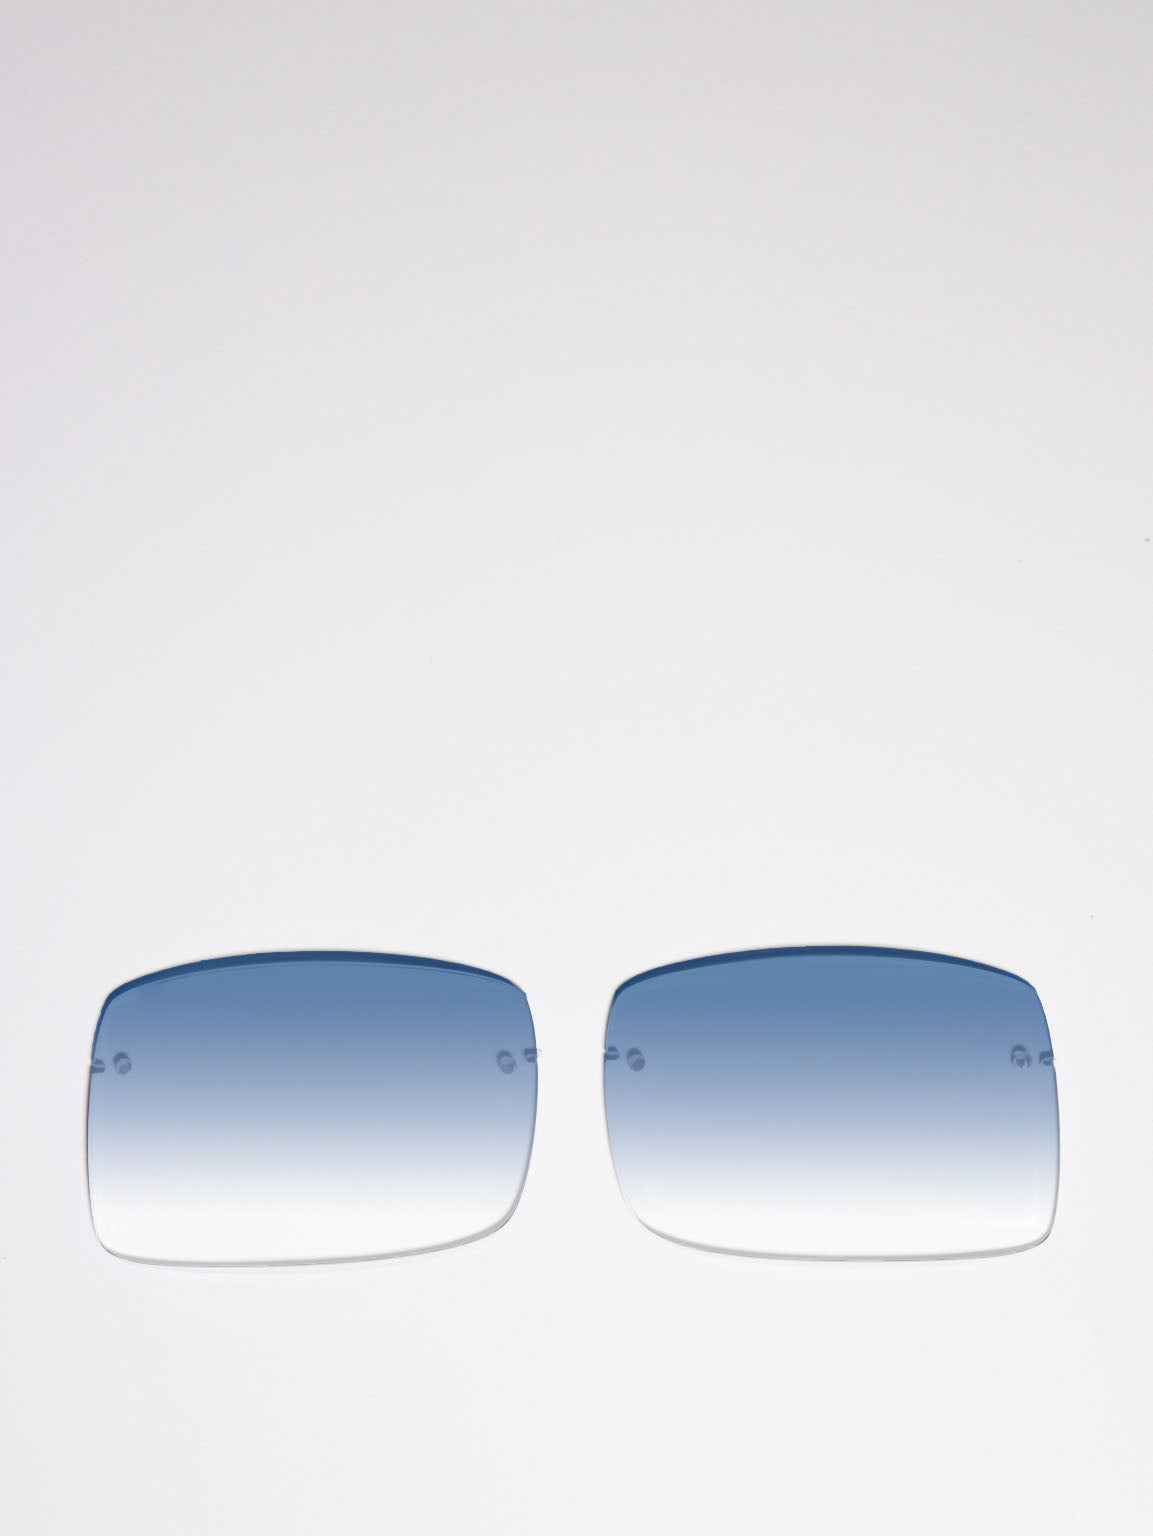 SFx Replacement Sunglass Lenses fits Cartier Santos Dumont - 58mm Wide |  eBay